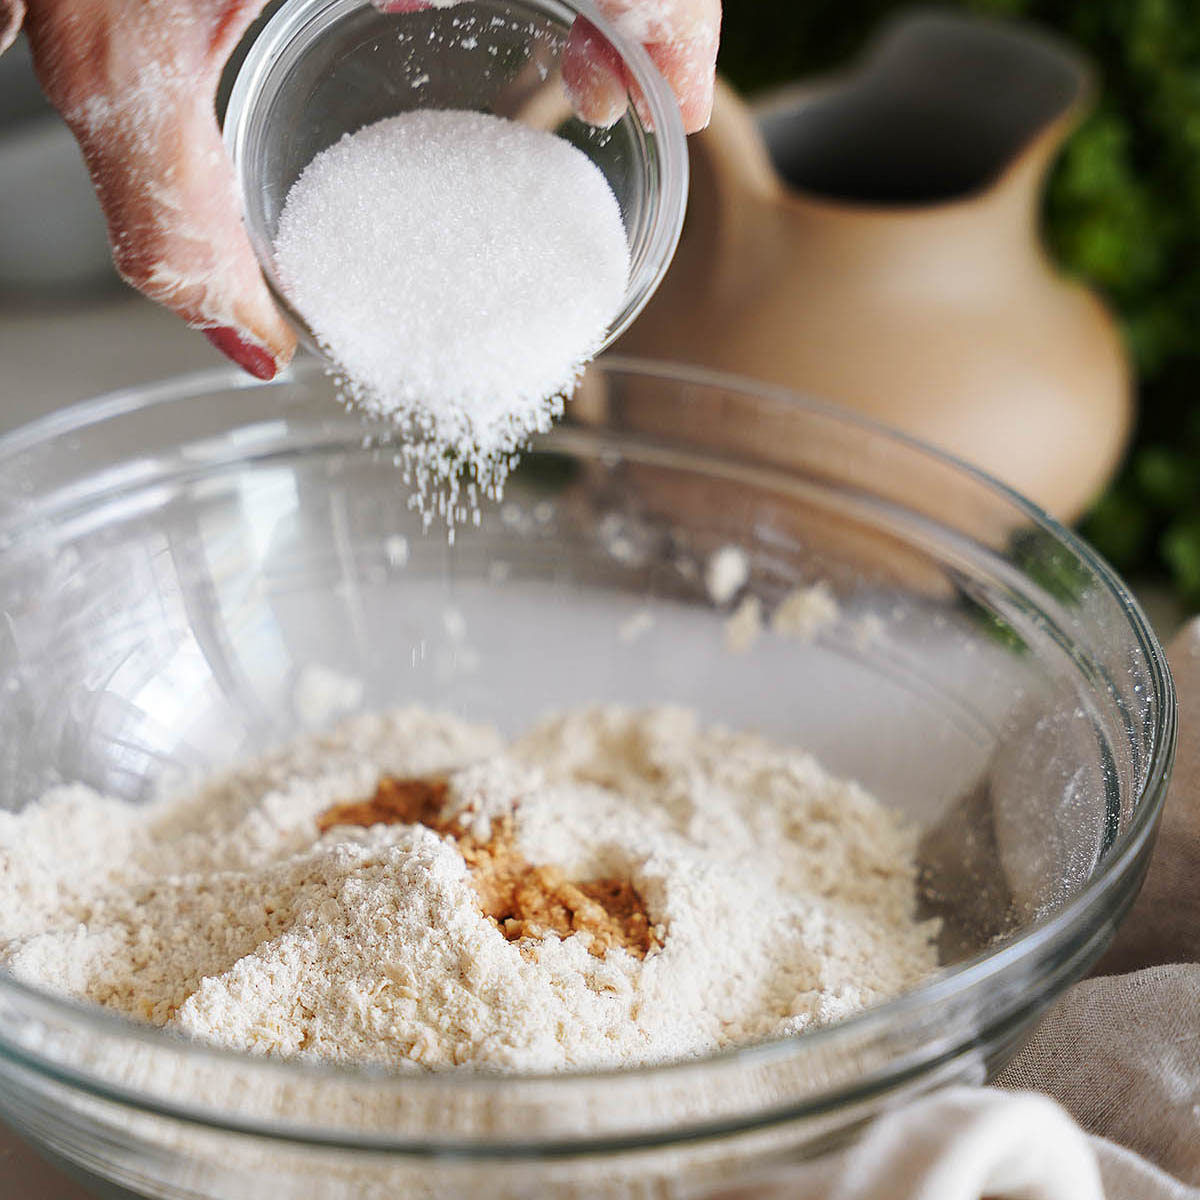 Adding sugar into a bowl with flour.